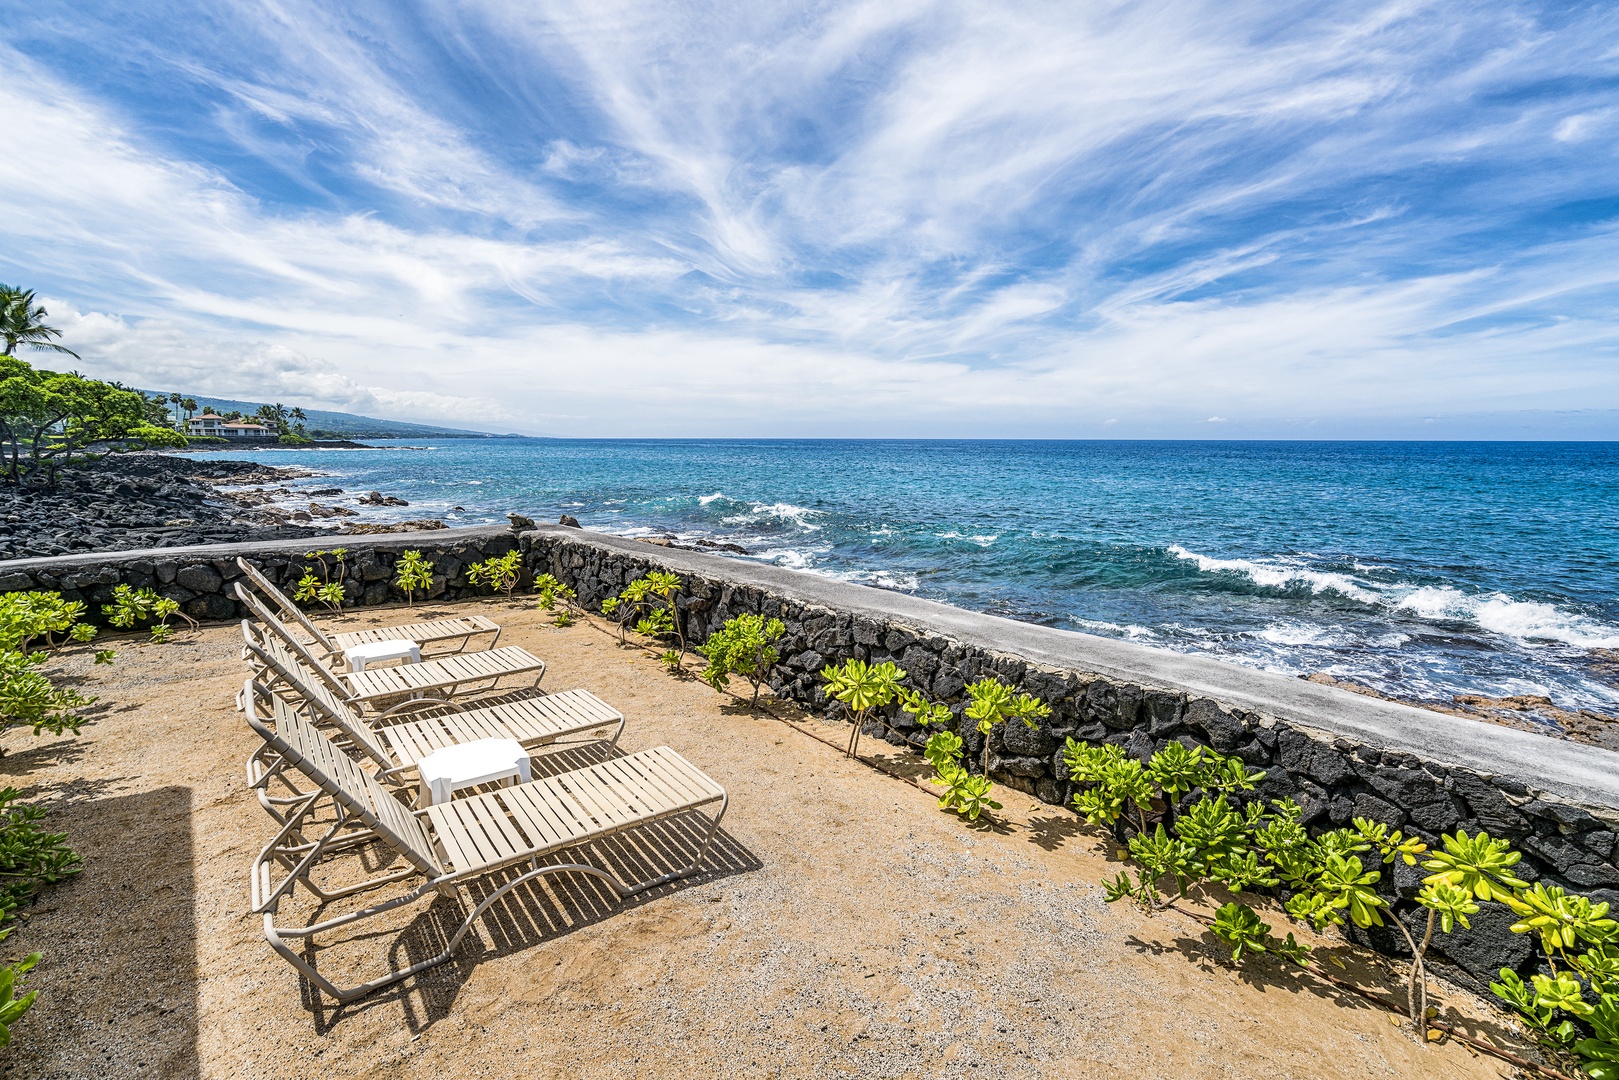 Kailua Kona Vacation Rentals, Casa De Emdeko 336 - Lounge ocean side work on that tan!